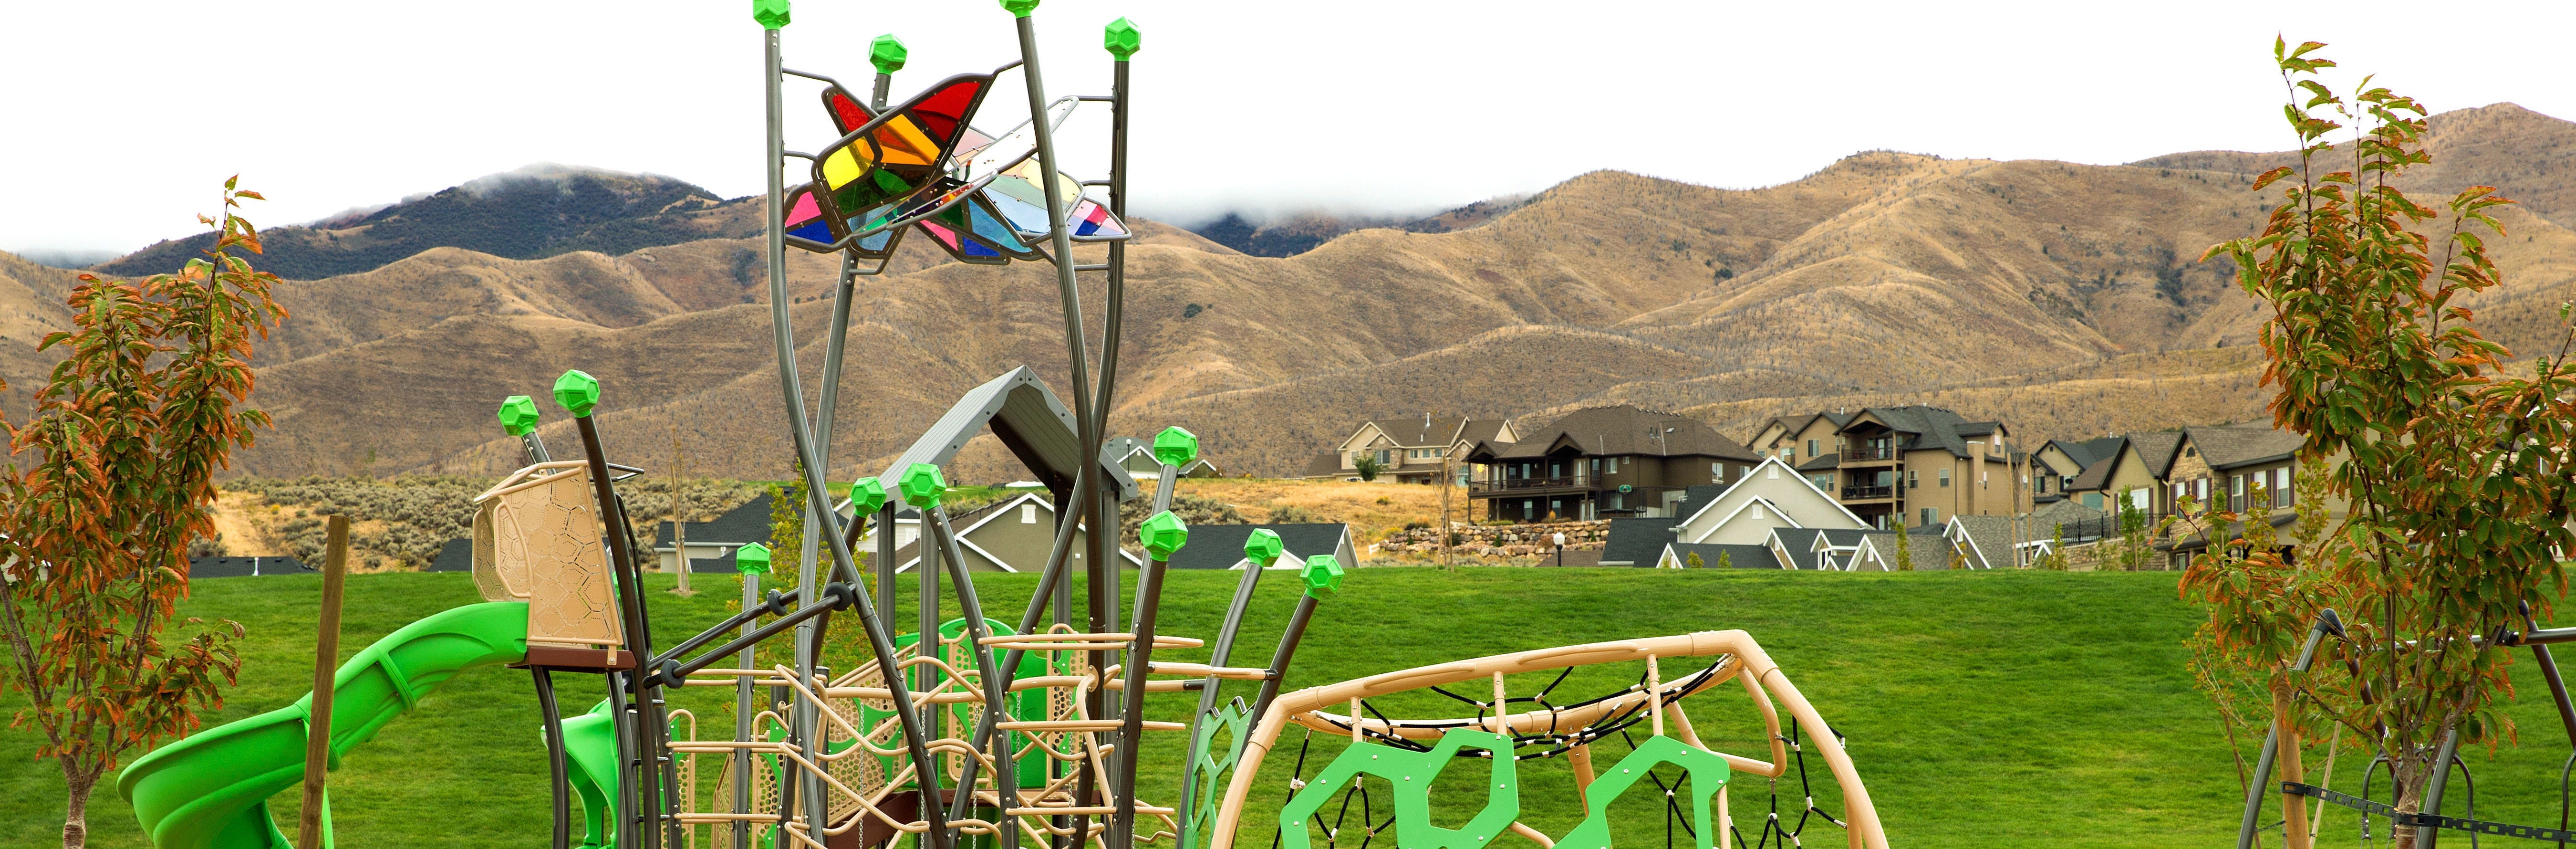 GameTime Brings Education and Funding to Utah Parks Agencies